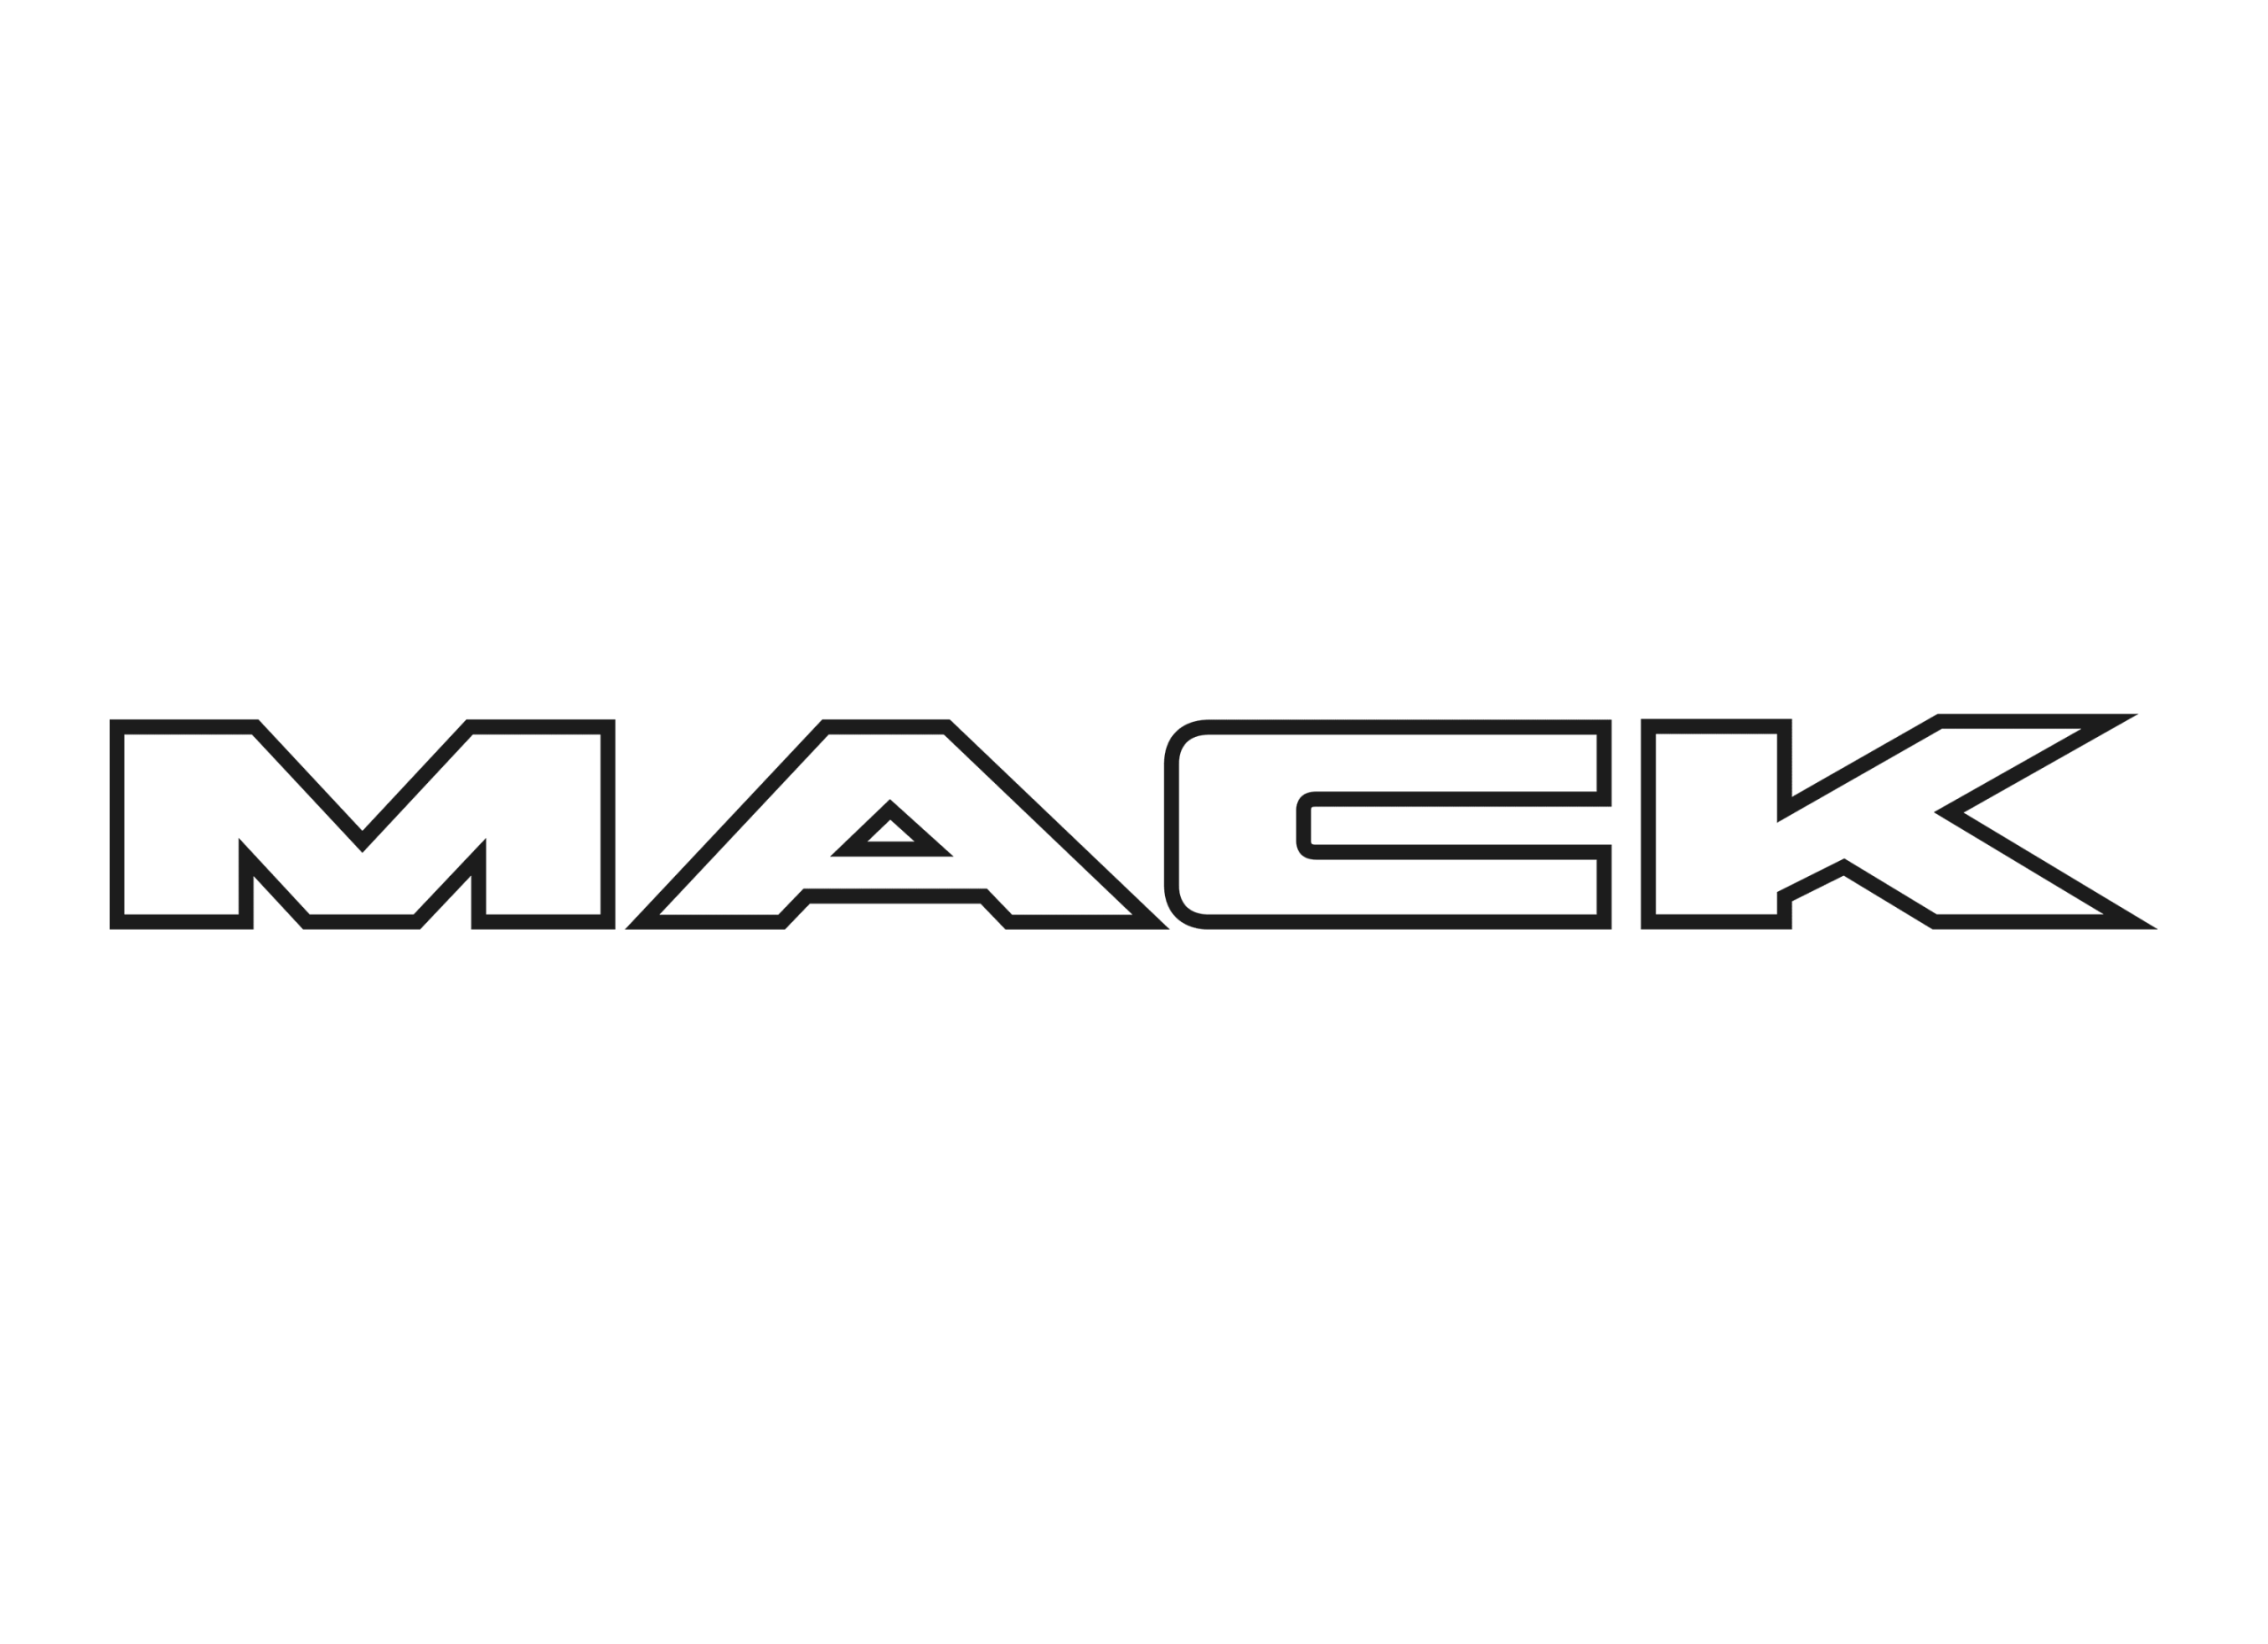 Mack logo 1900-present